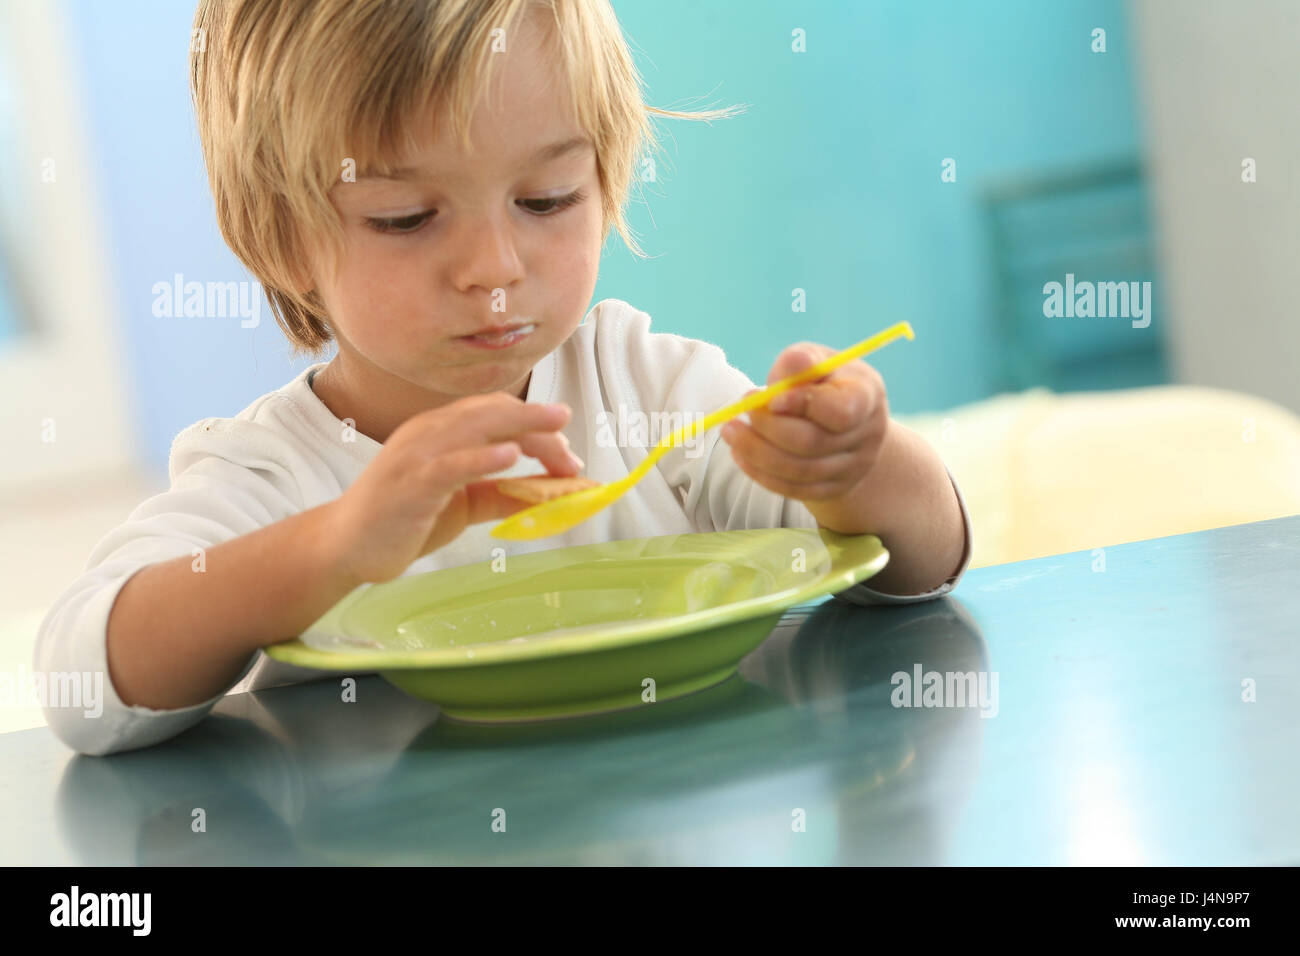 Boy, 3 years, porridge, eat, portrait, curled, Stock Photo